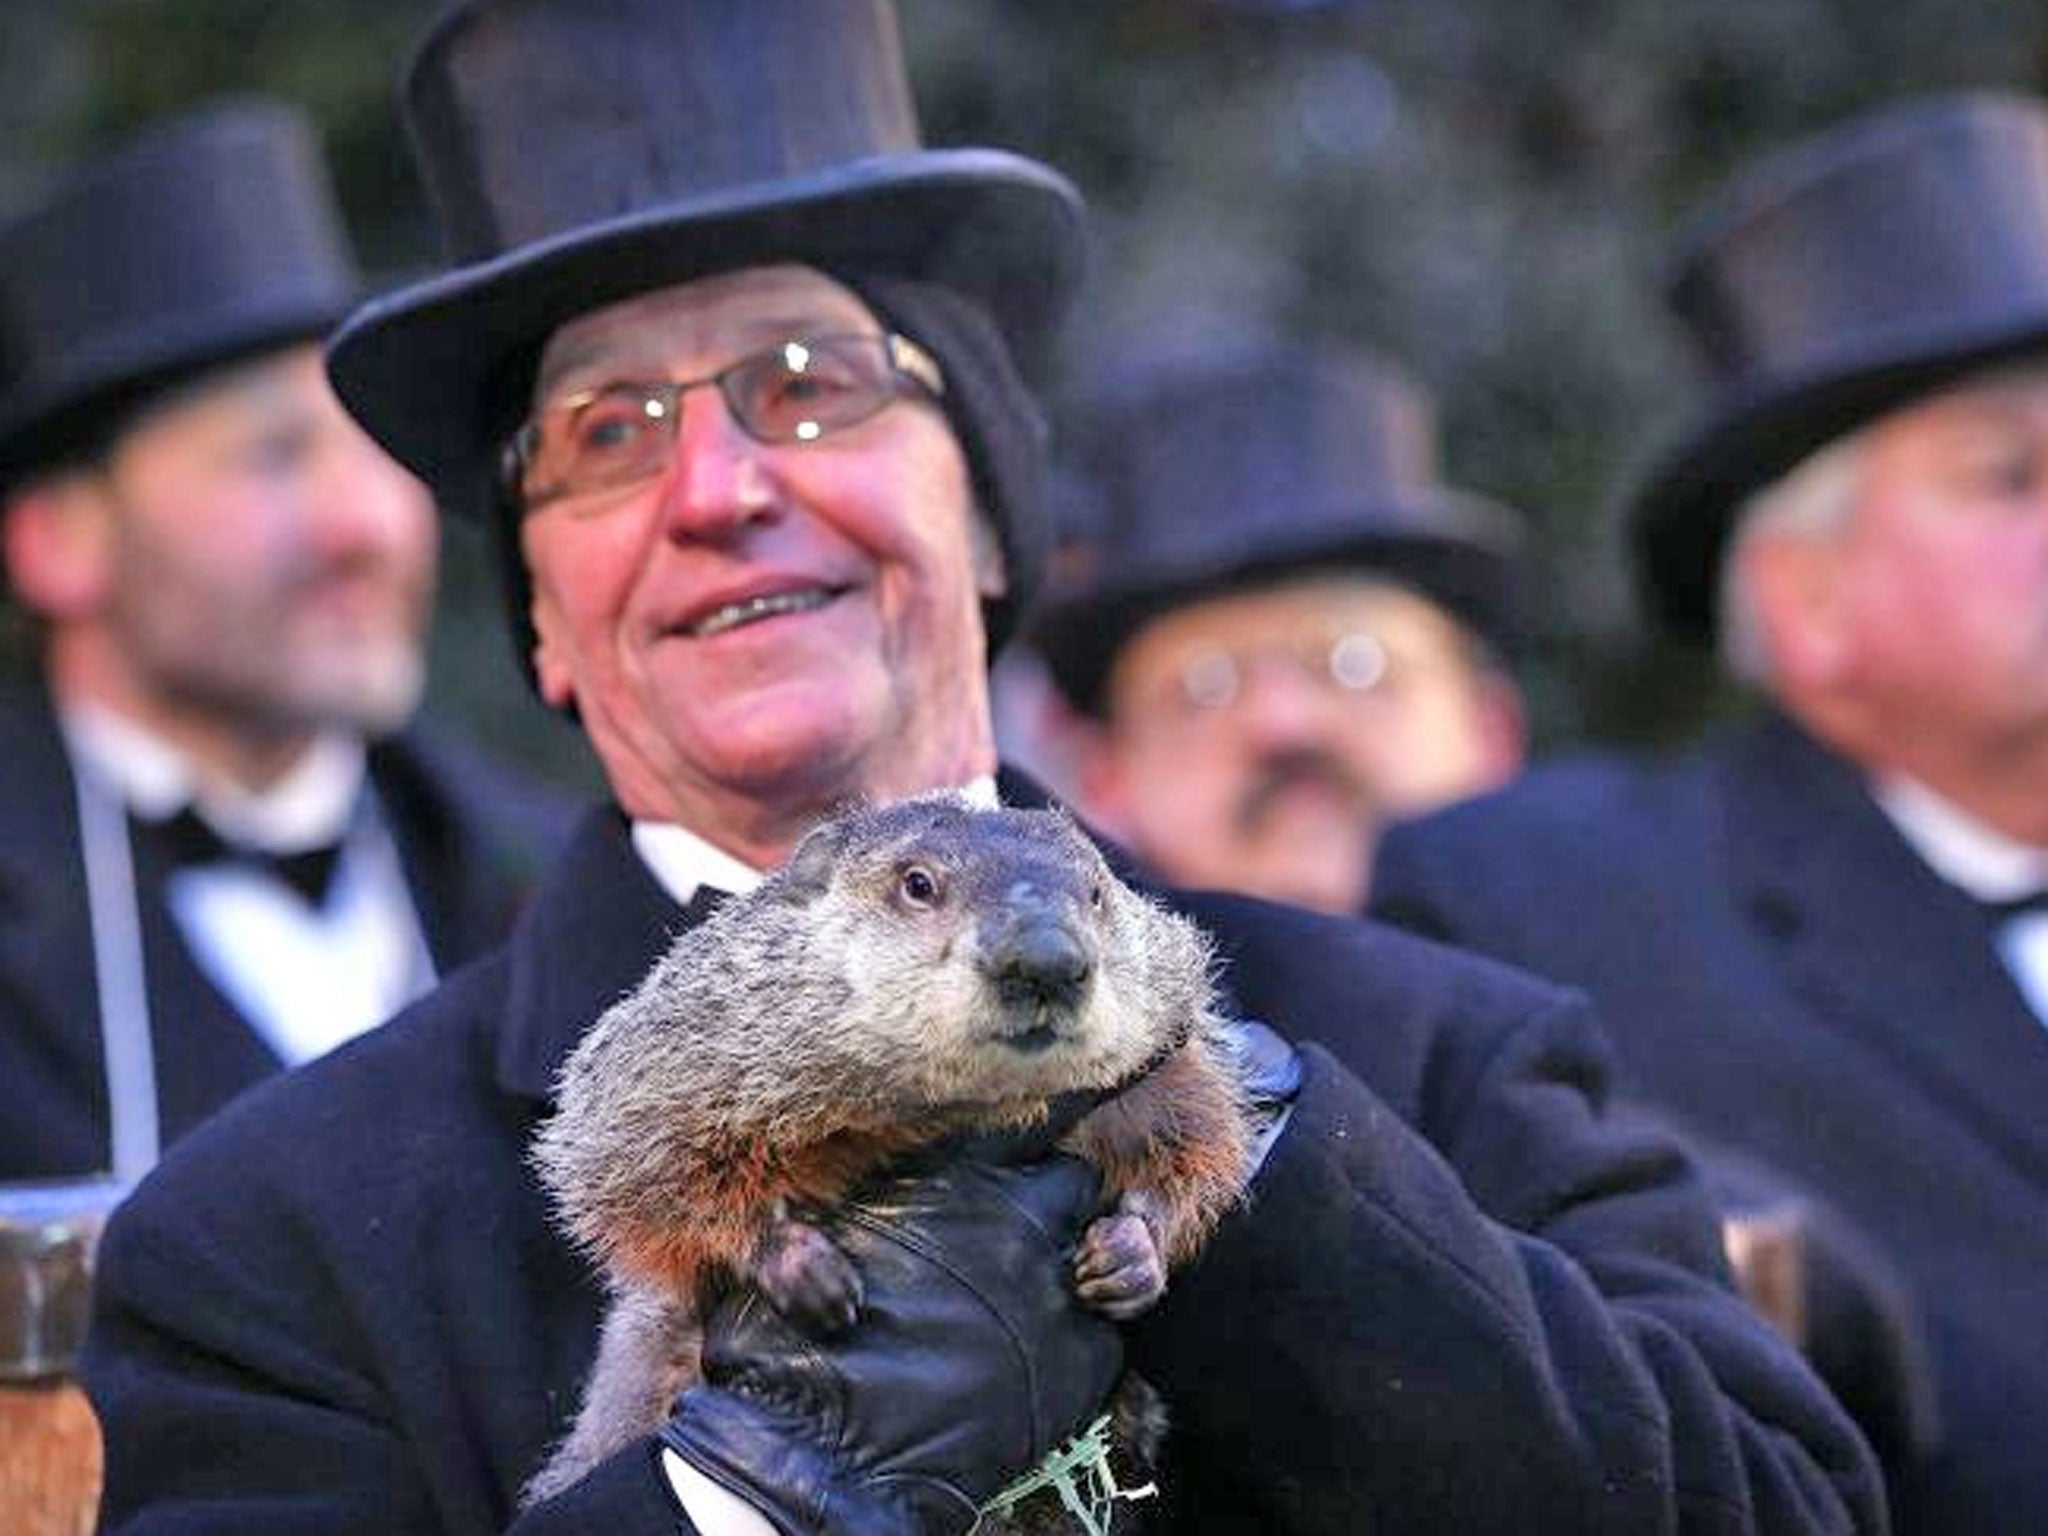 Co-handler Ron Ploucha holds Phil, the weather prognosticating groundhog during the Groundhog Day celebration at Gobblers Knob in Punxsutawney, Pennsylvania, USA